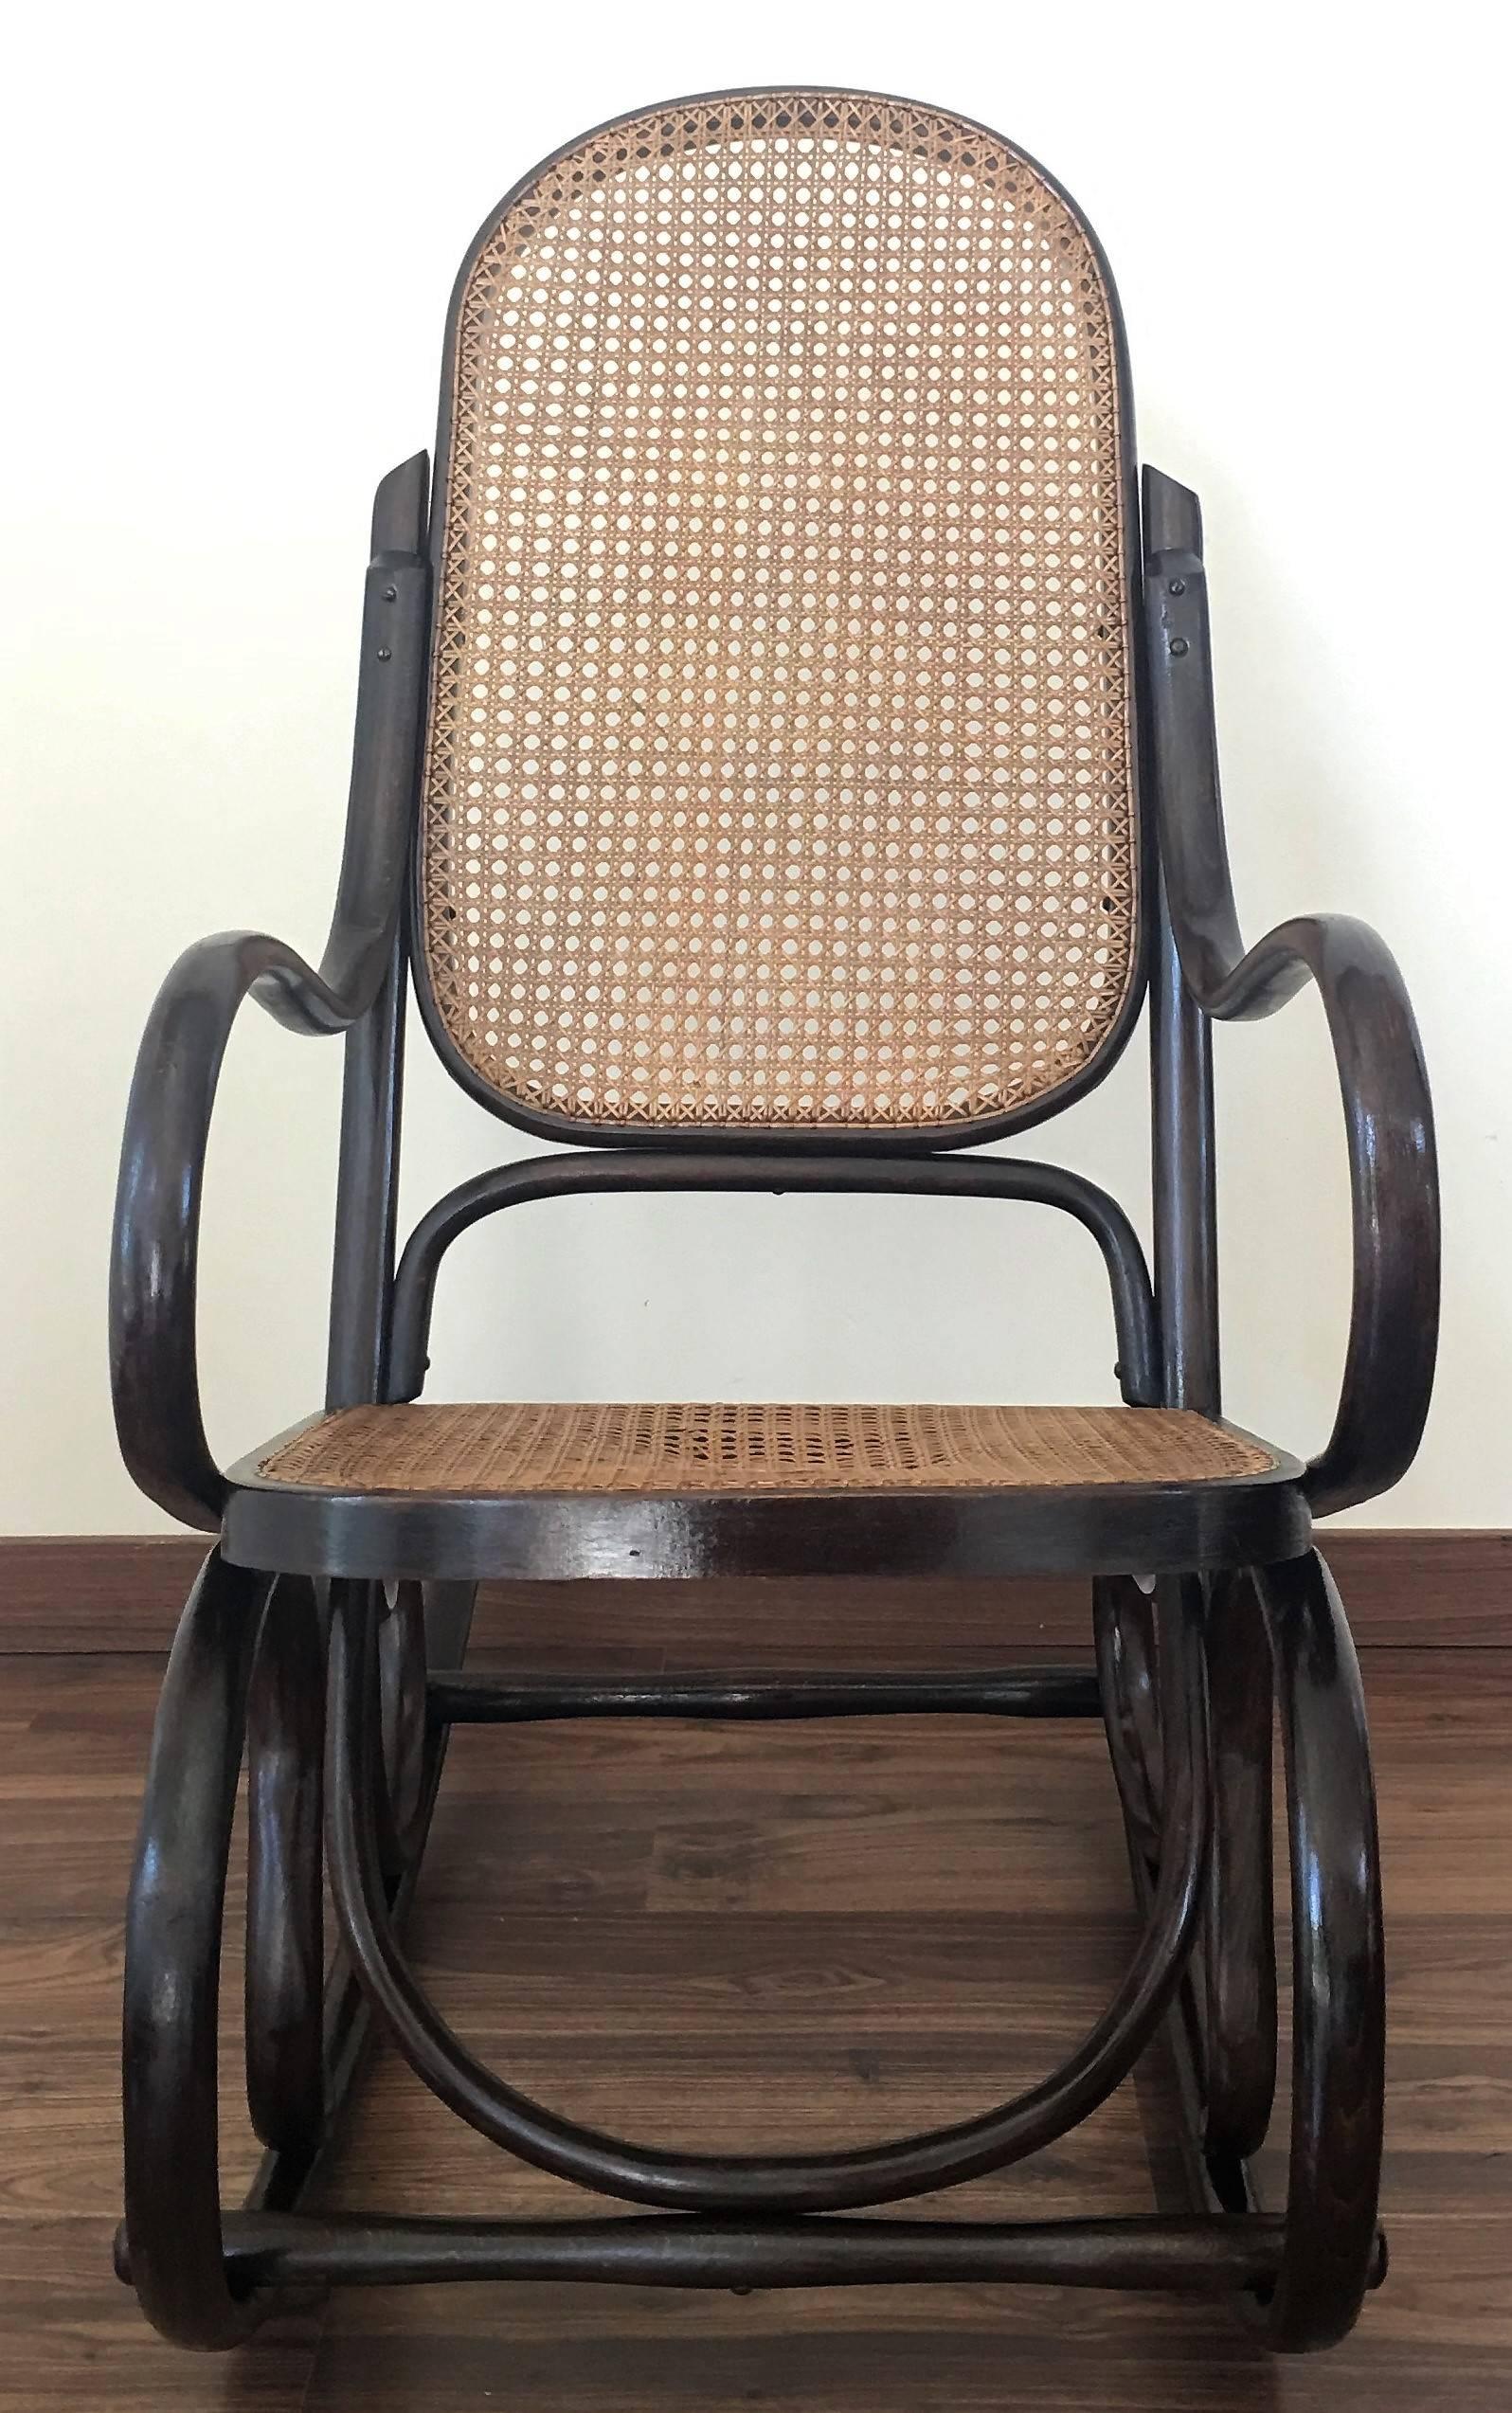 cane seat rocking chair